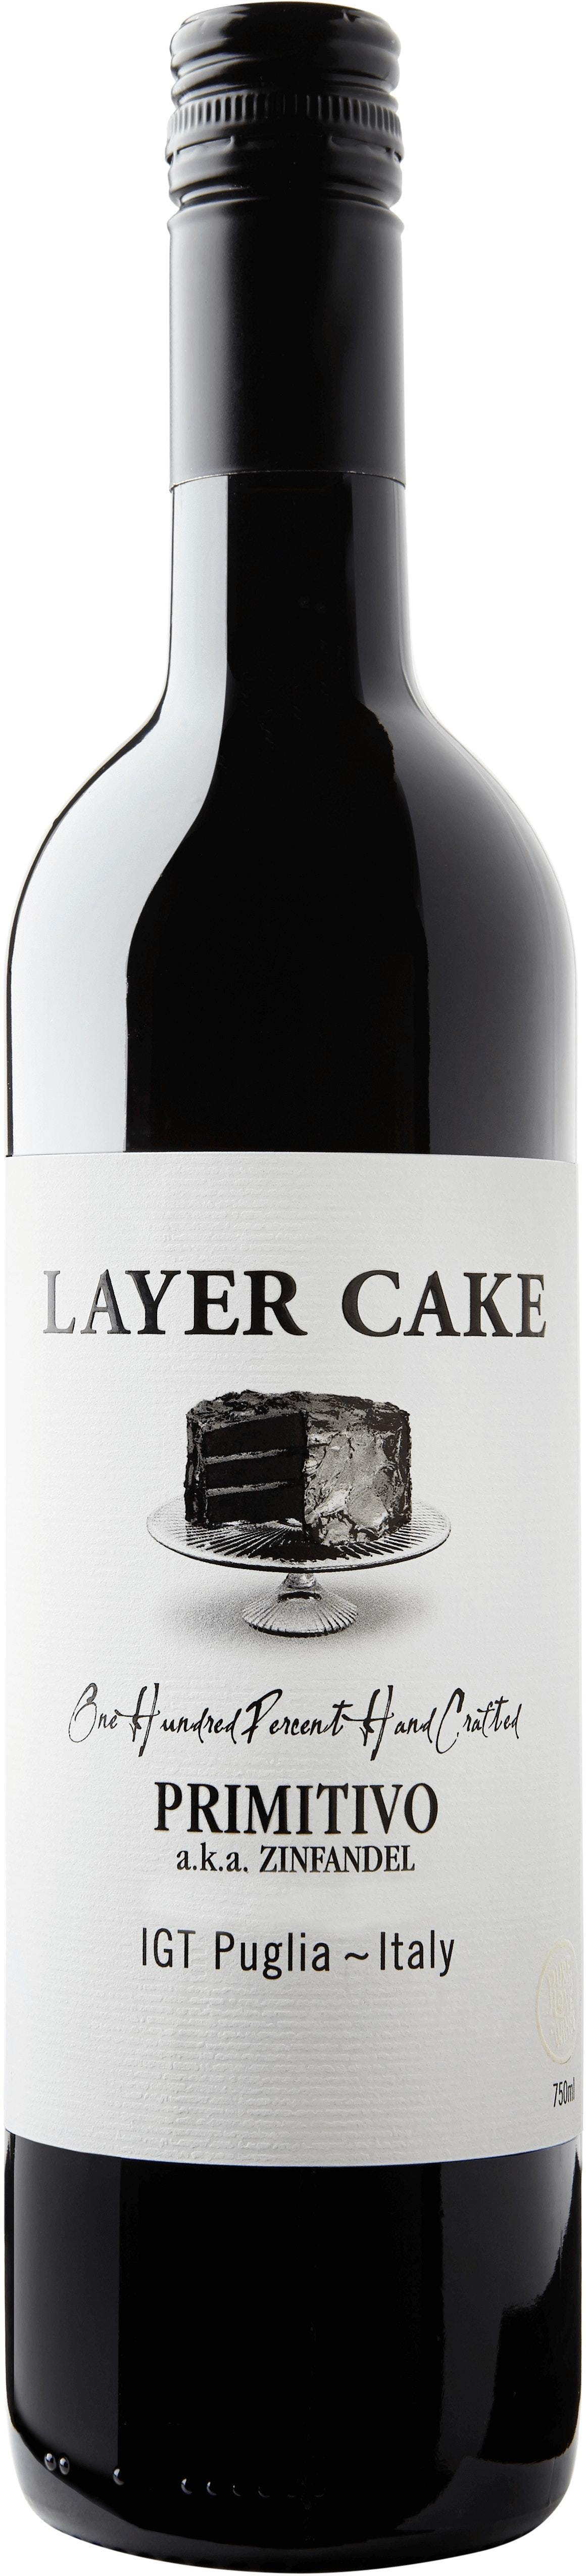 images/wine/Red Wine/Layer Cake Primitivo Zinfandel.jpg